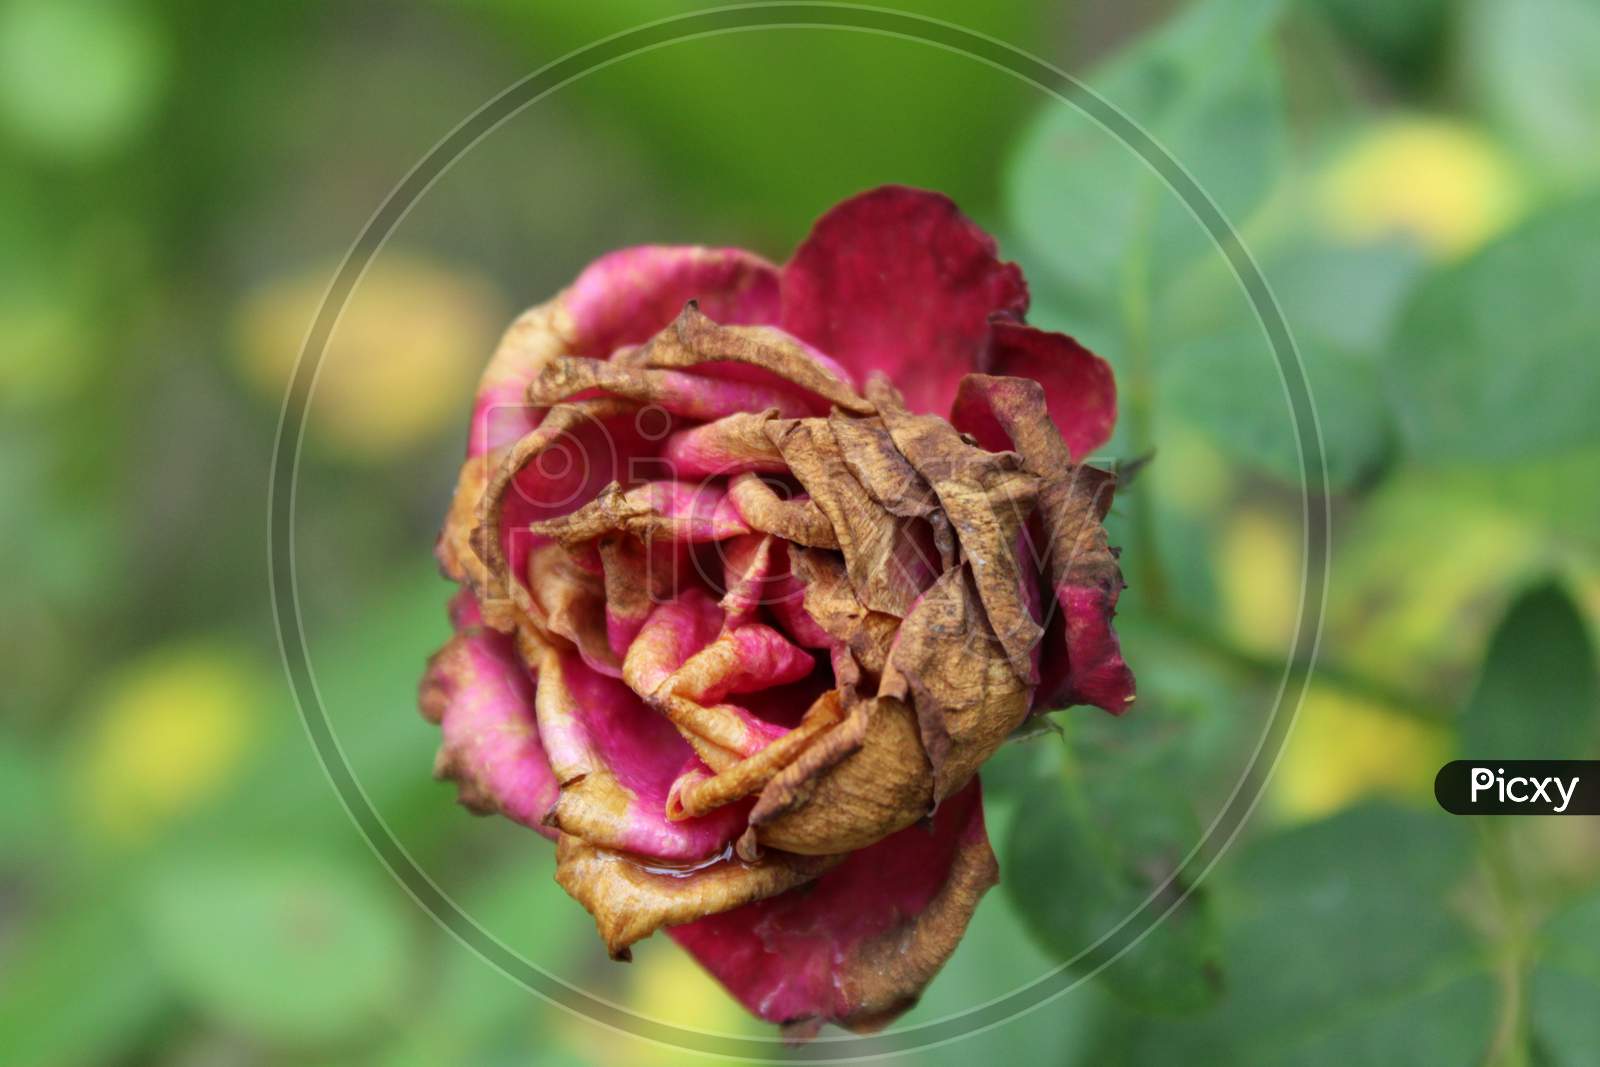 Rose photo capture in the garden